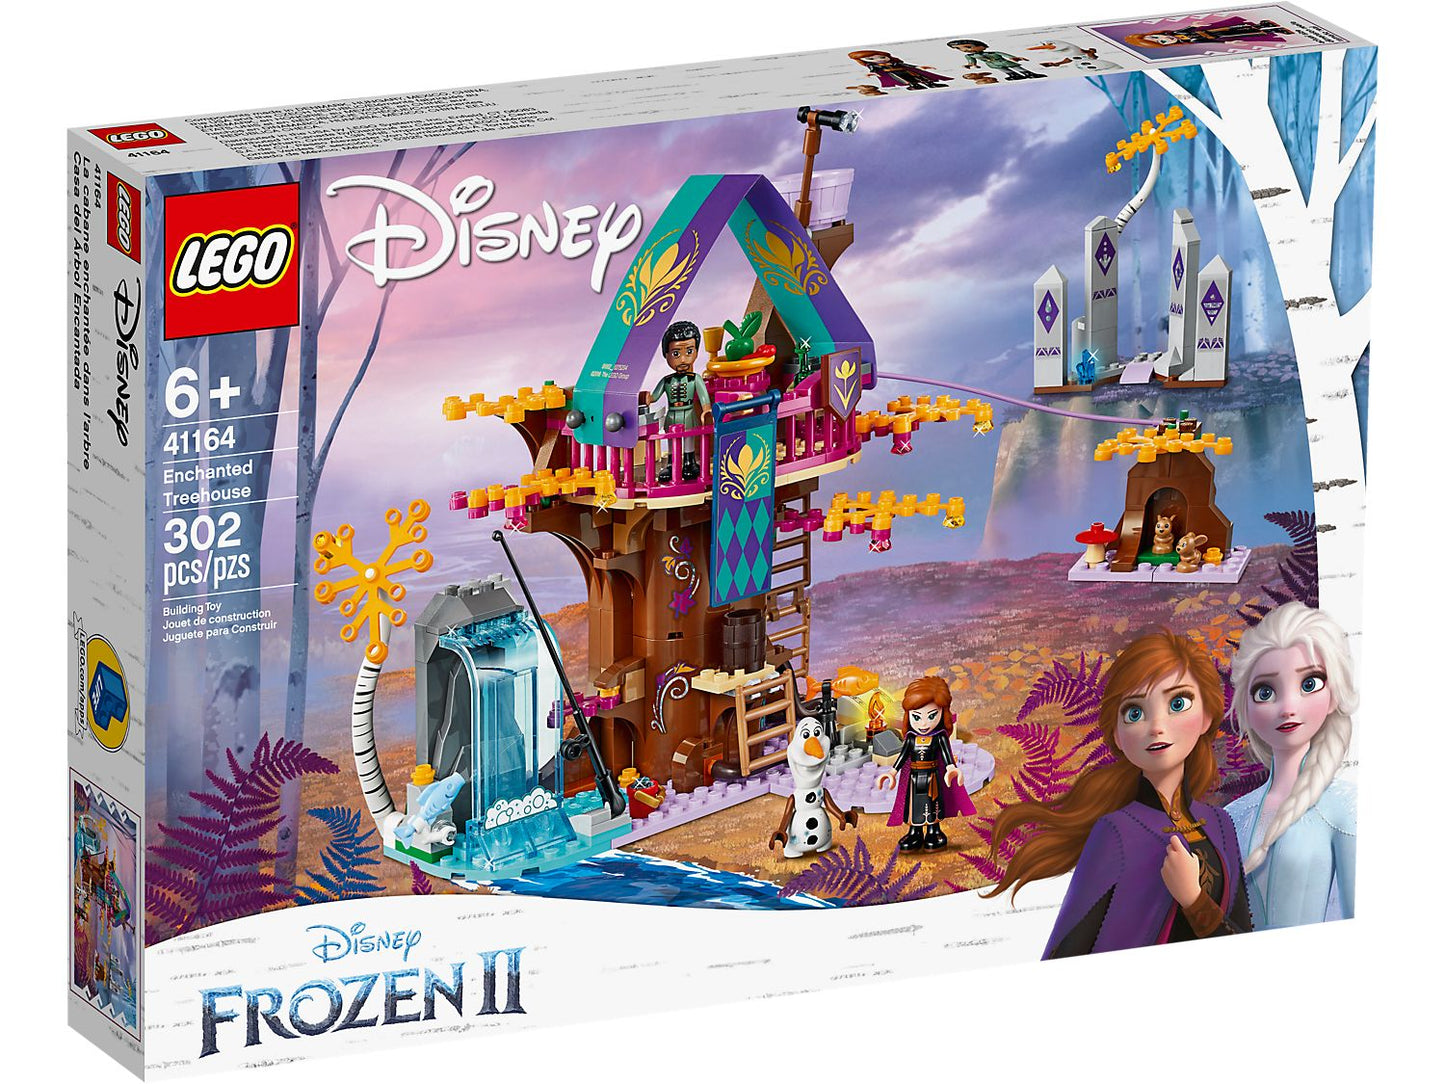 Lego Disney Frozen II Enchanted Treehouse 41164